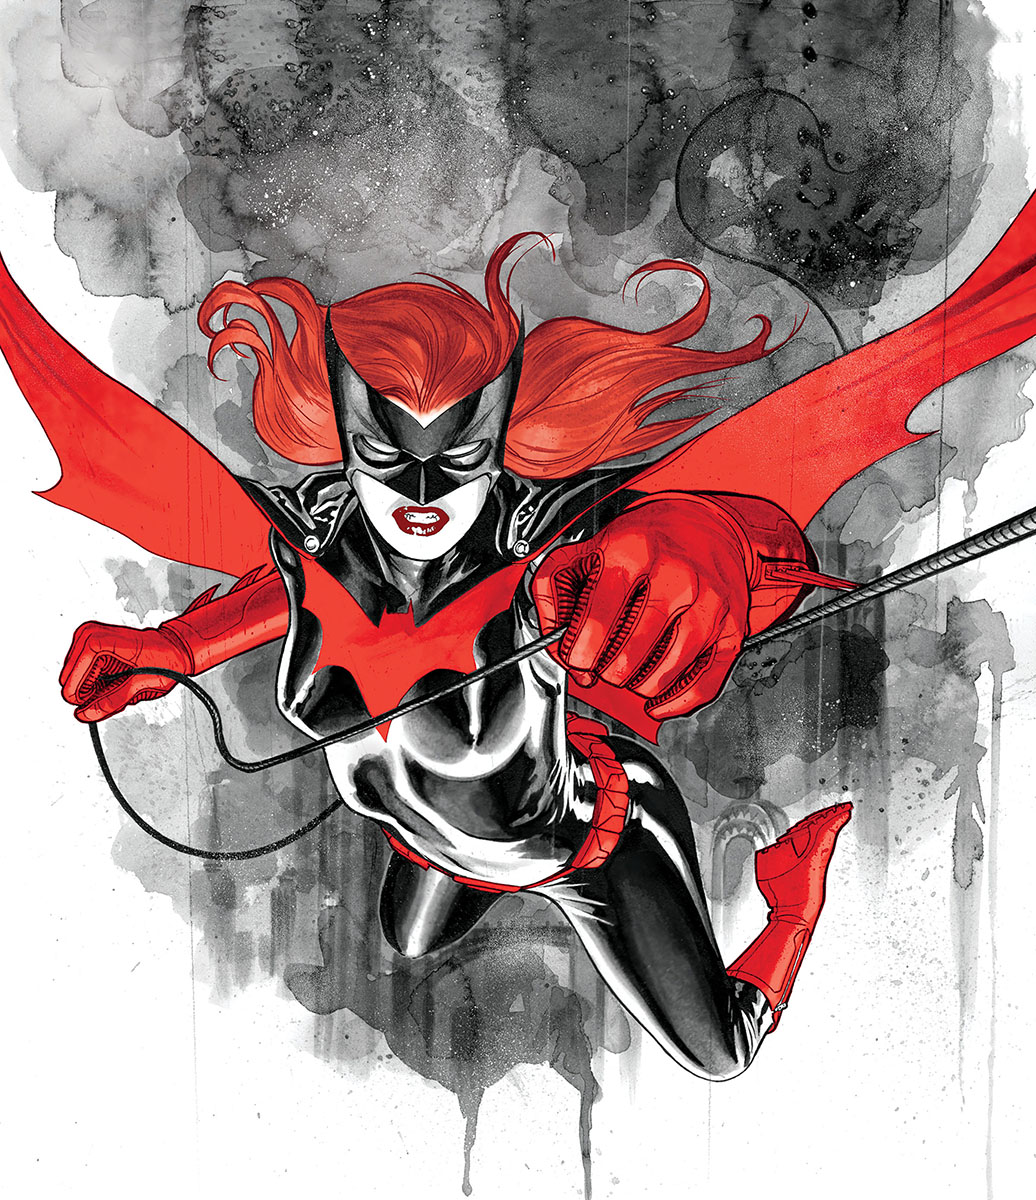 Batwoman Series in Development at CW